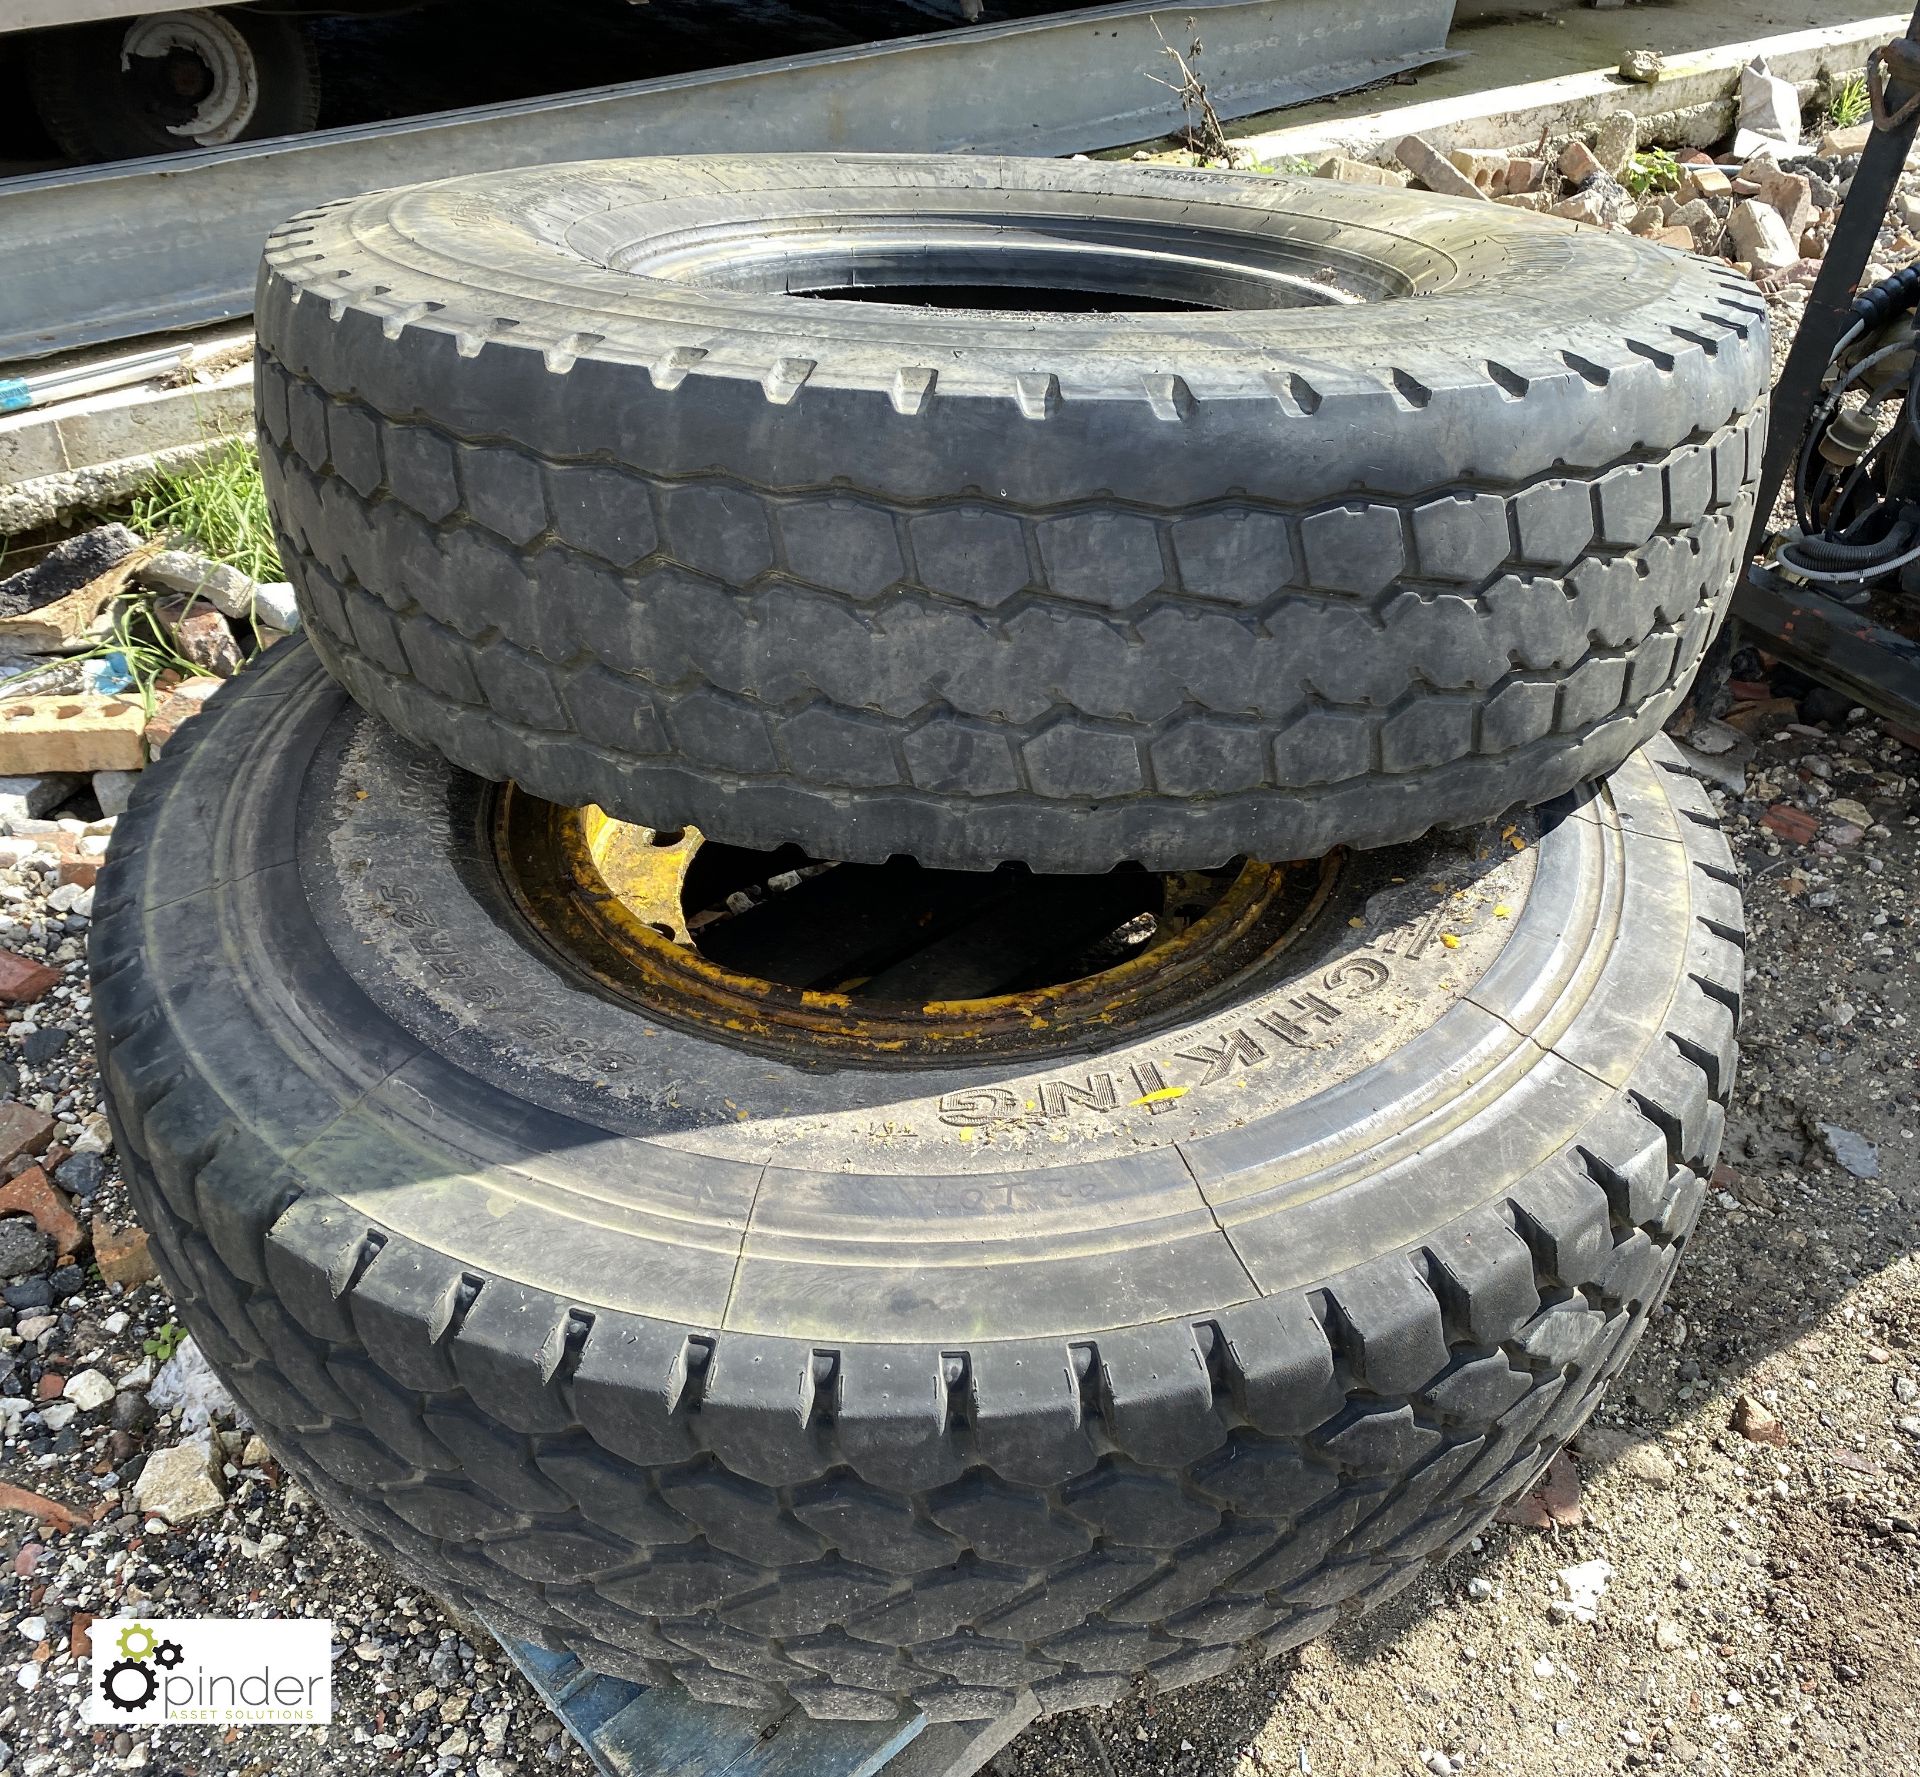 Bridgestone 385/95 R25 tubeless Wagon Tyre and Techking 385/95 R25 tubeless Wagon Tyre with rim